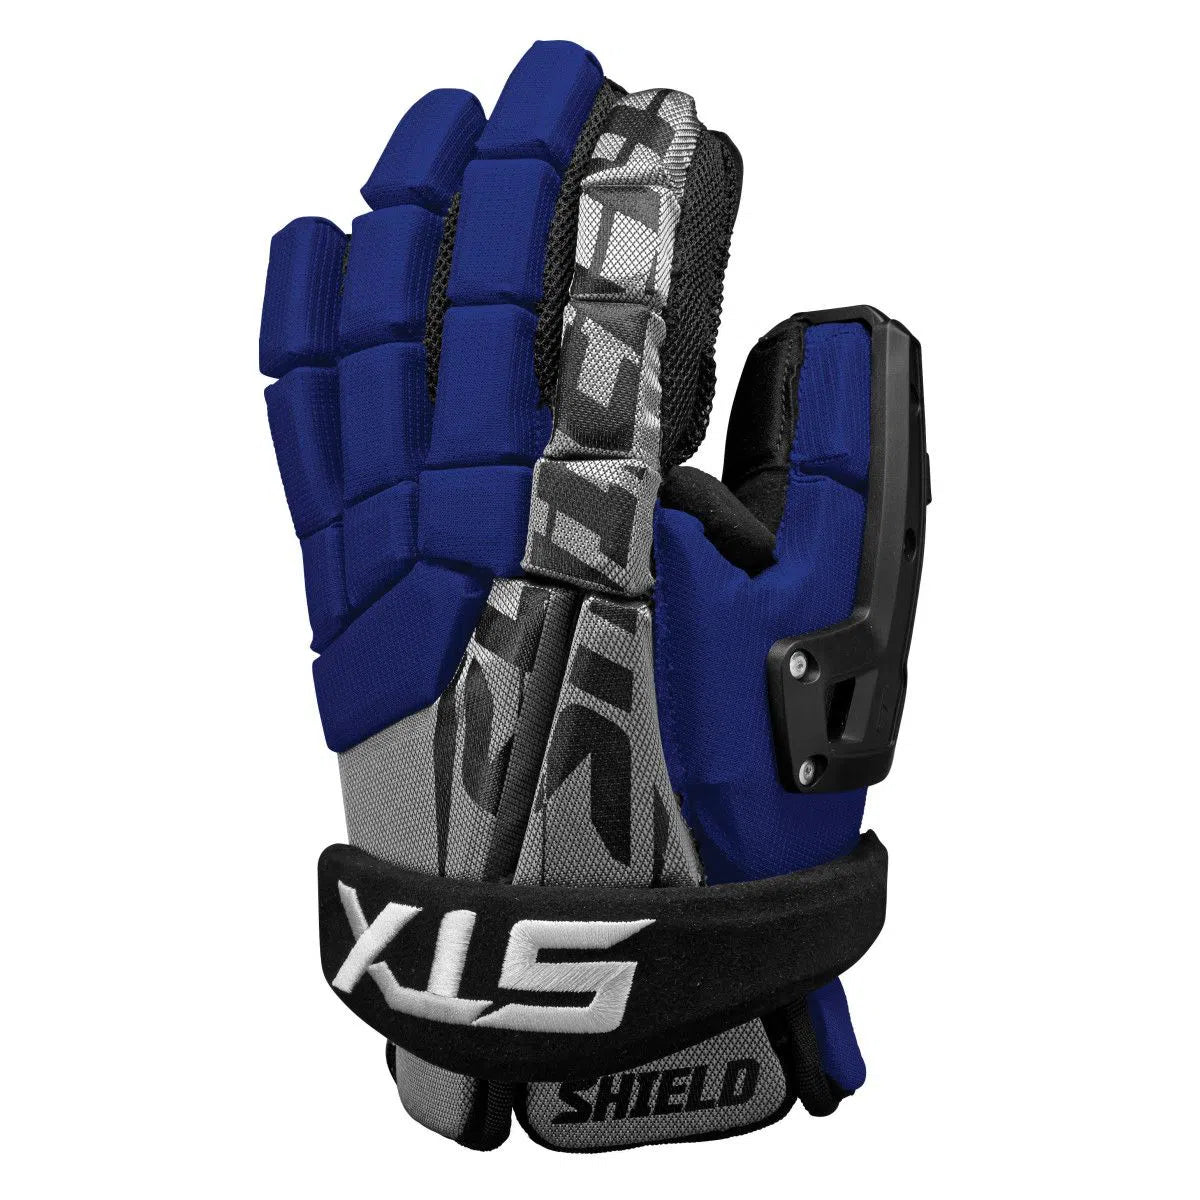 STX Shield 300 Goalie Lacrosse Gloves